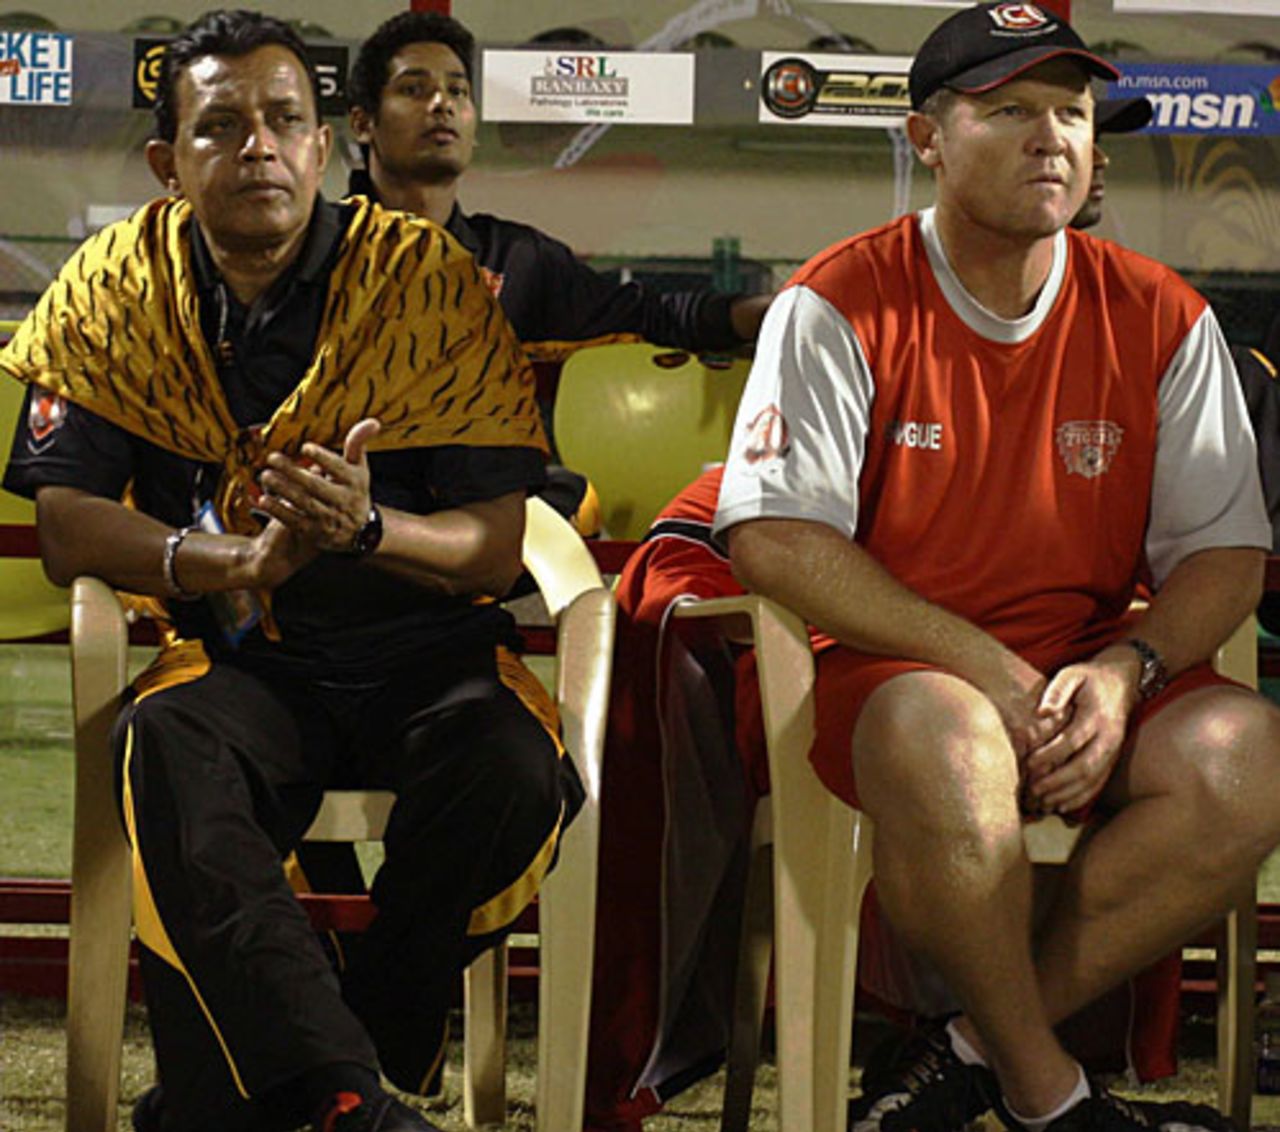 Royal Bengal Tigers coach Daryll Cullinan and stakeholder Mithun Chakraborty watch the match, Lahore Badshahs v Royal Bengal Tigers, ICL, Hyderabad, October 12, 2008